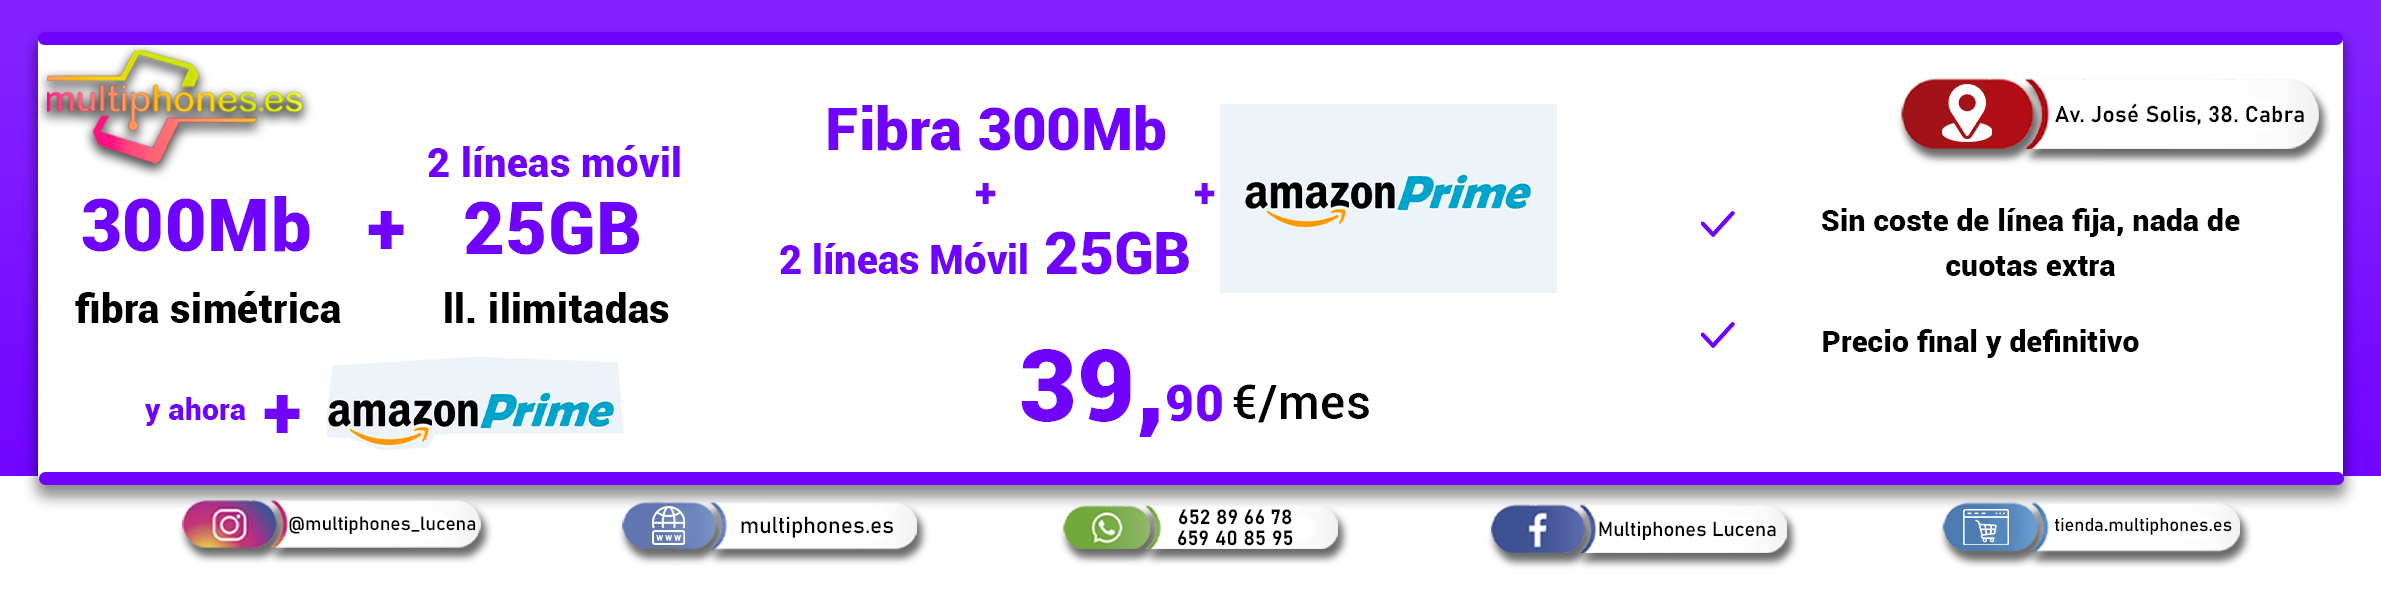 Finetwork Fibra 300Mb + 2 líneas móvil 25GB + amazon prime